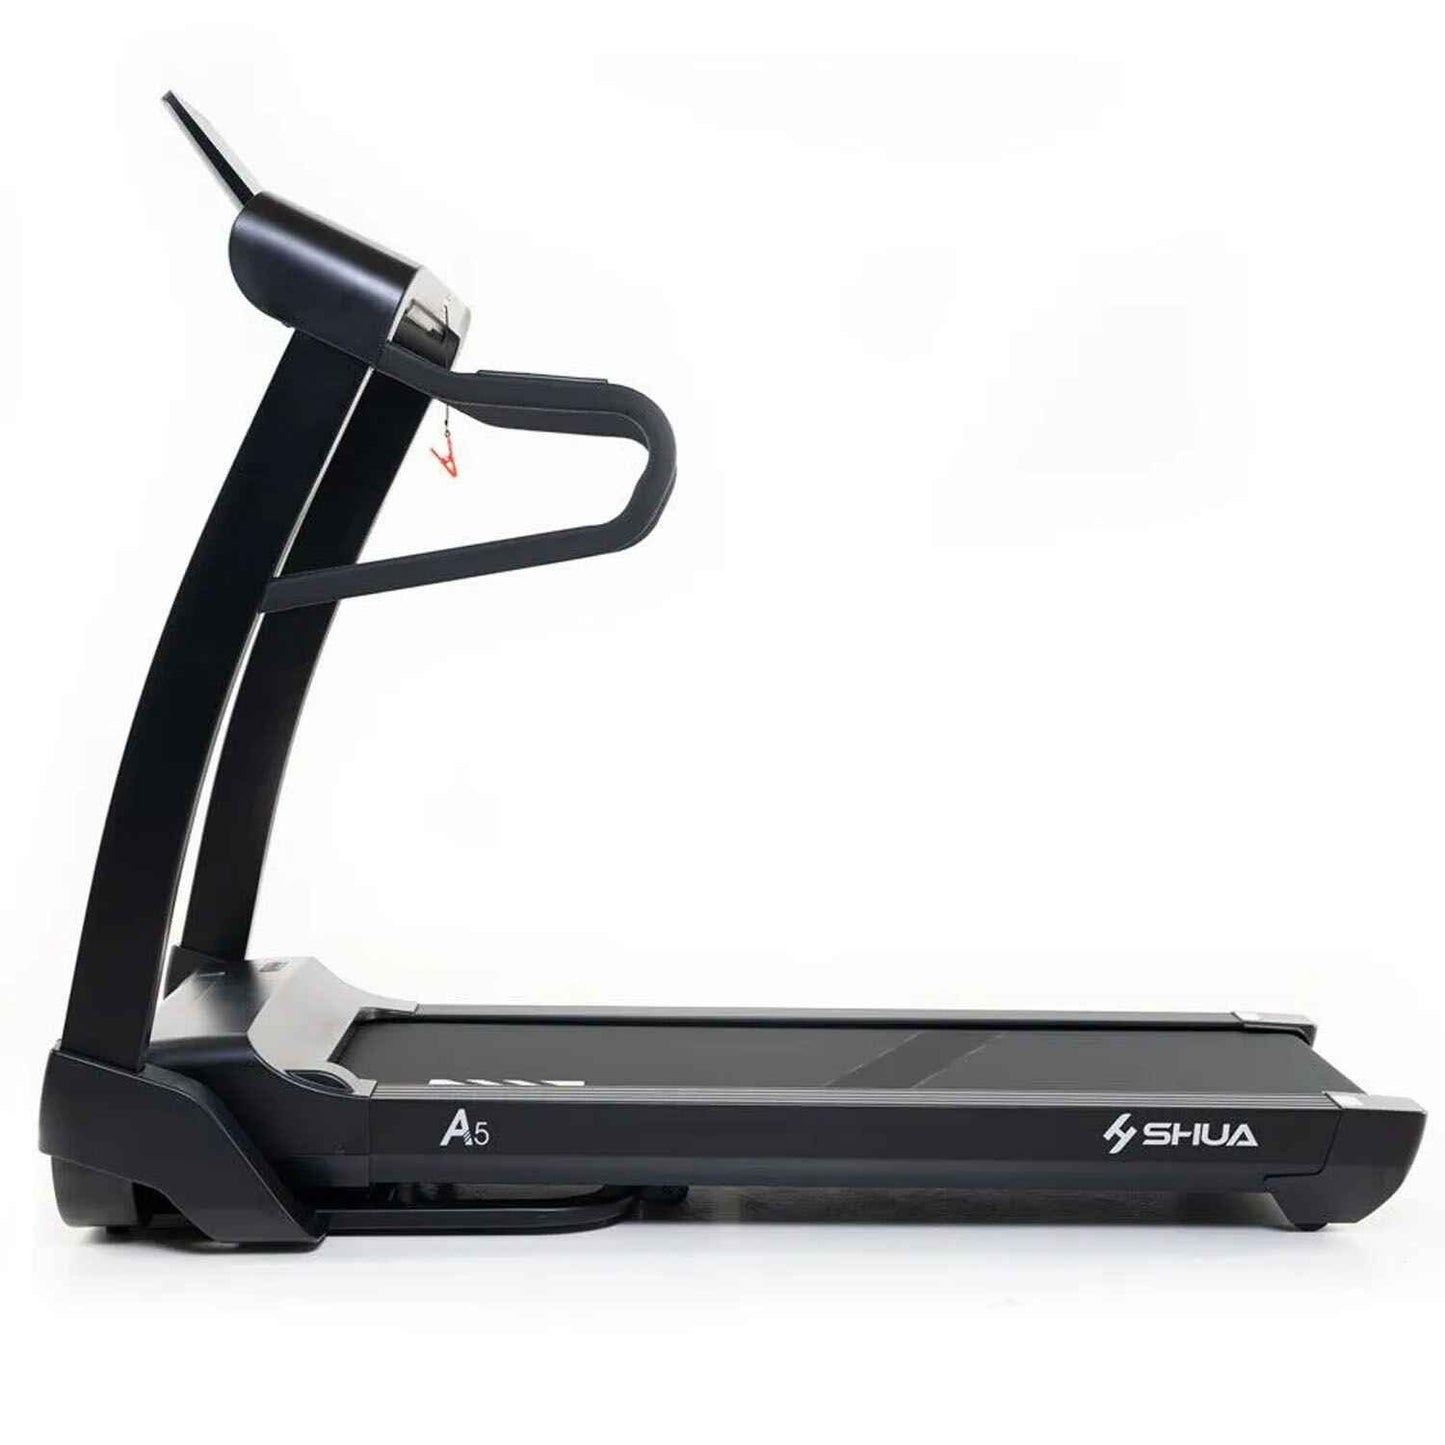 SHUA A5 Home Use Treadmill (3.5 PHP AC Motor)